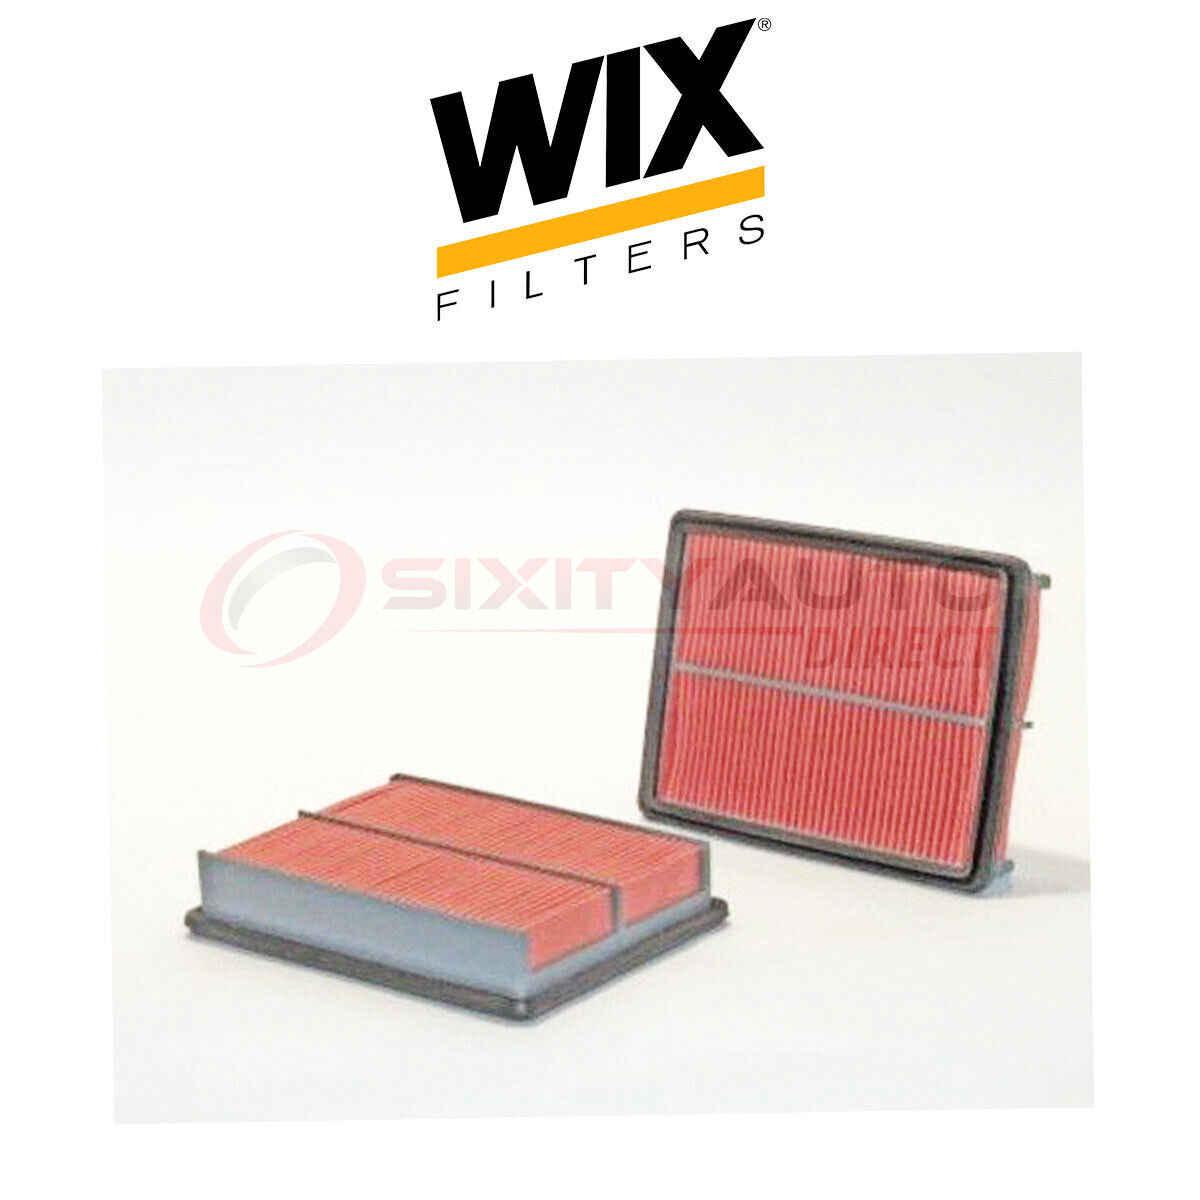 WIX Air Filter for 1994-1997 Ford Aspire 1.3L L4 - Filtration System rj